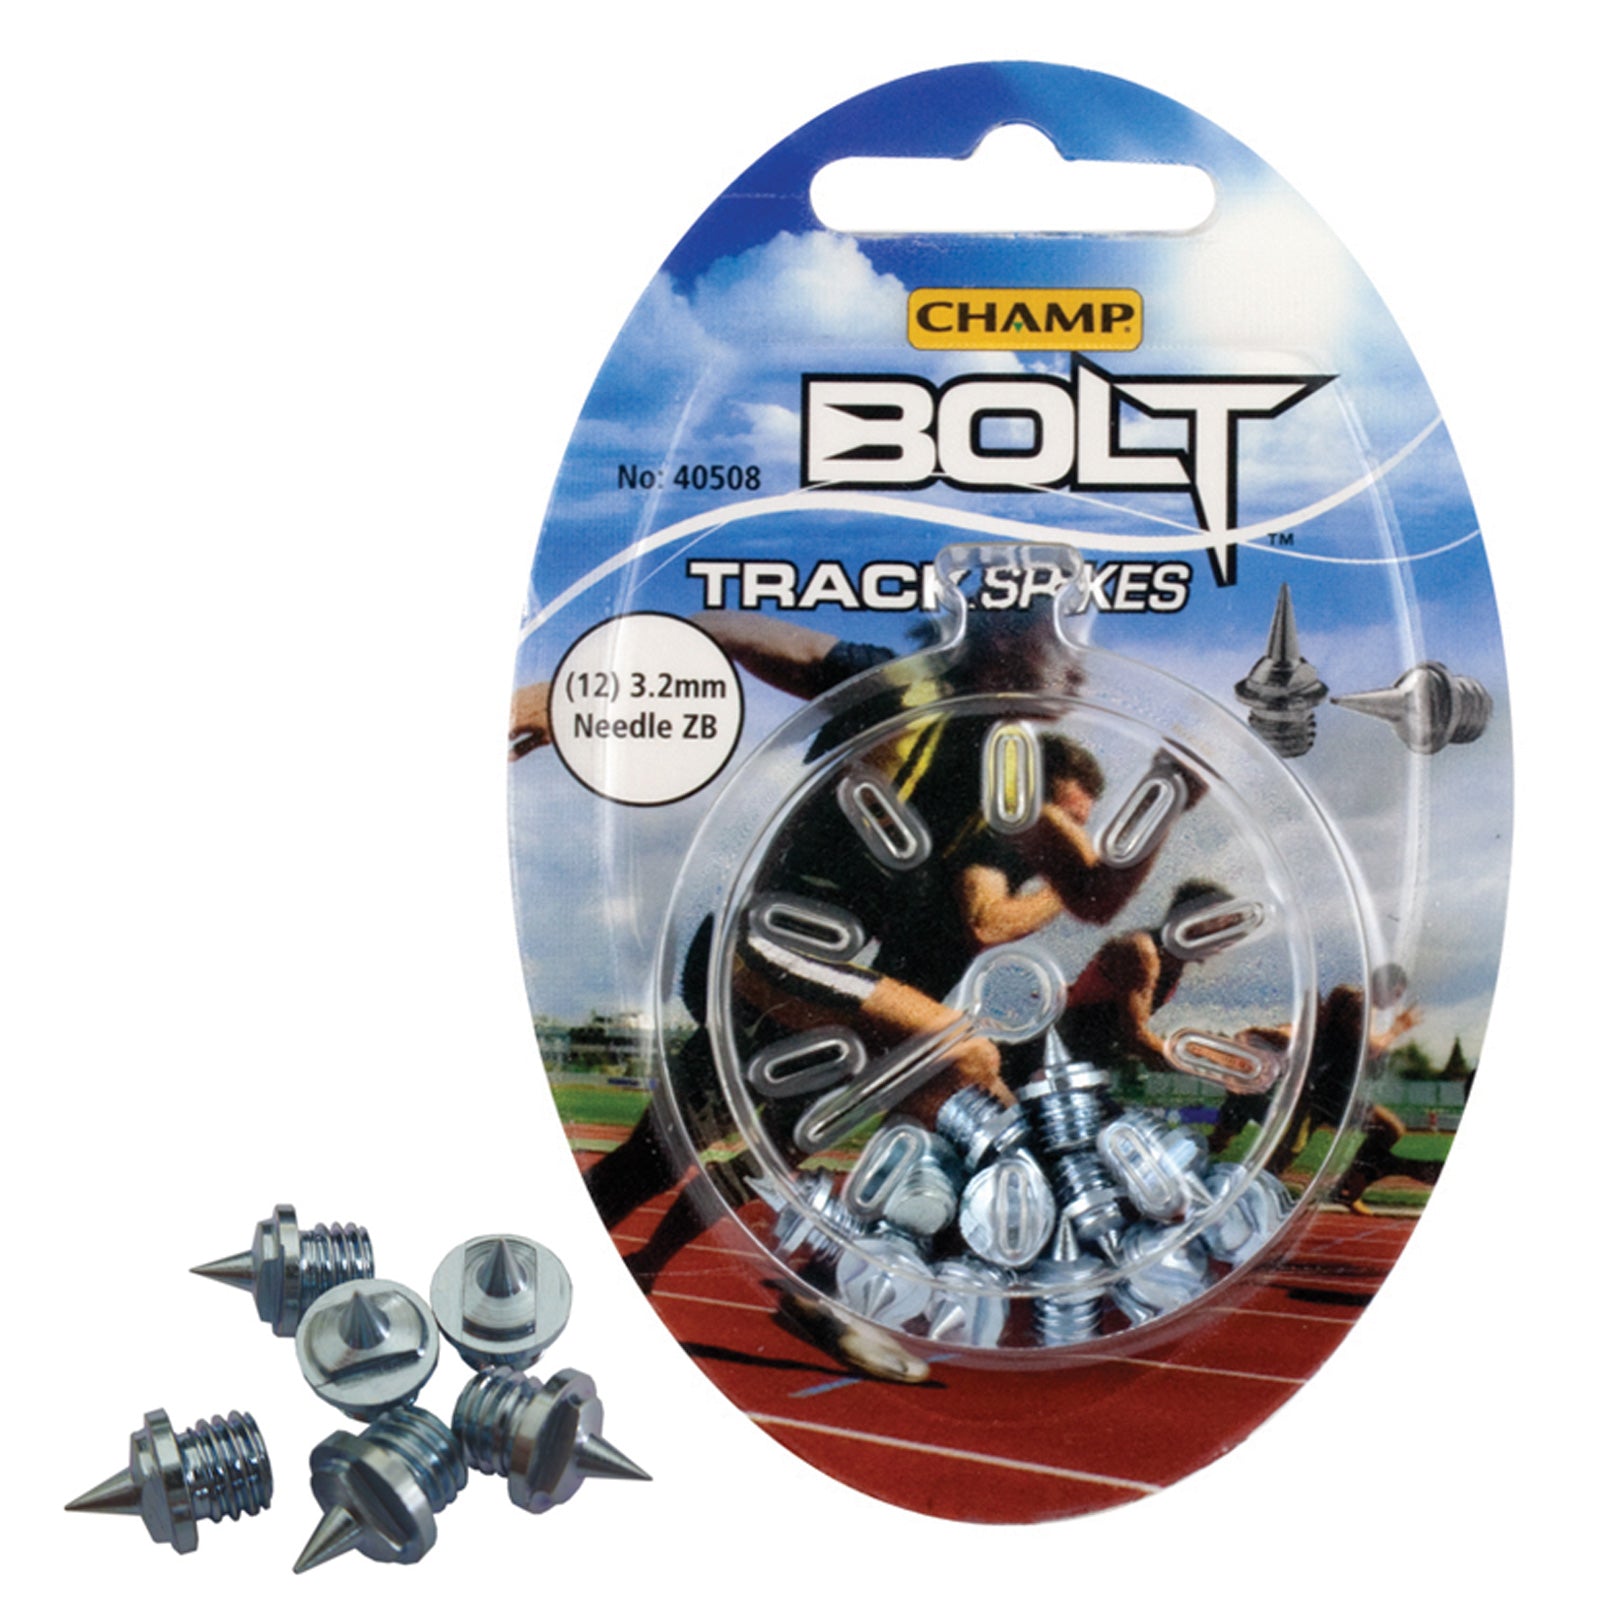 Champ Bolt Track Spikes